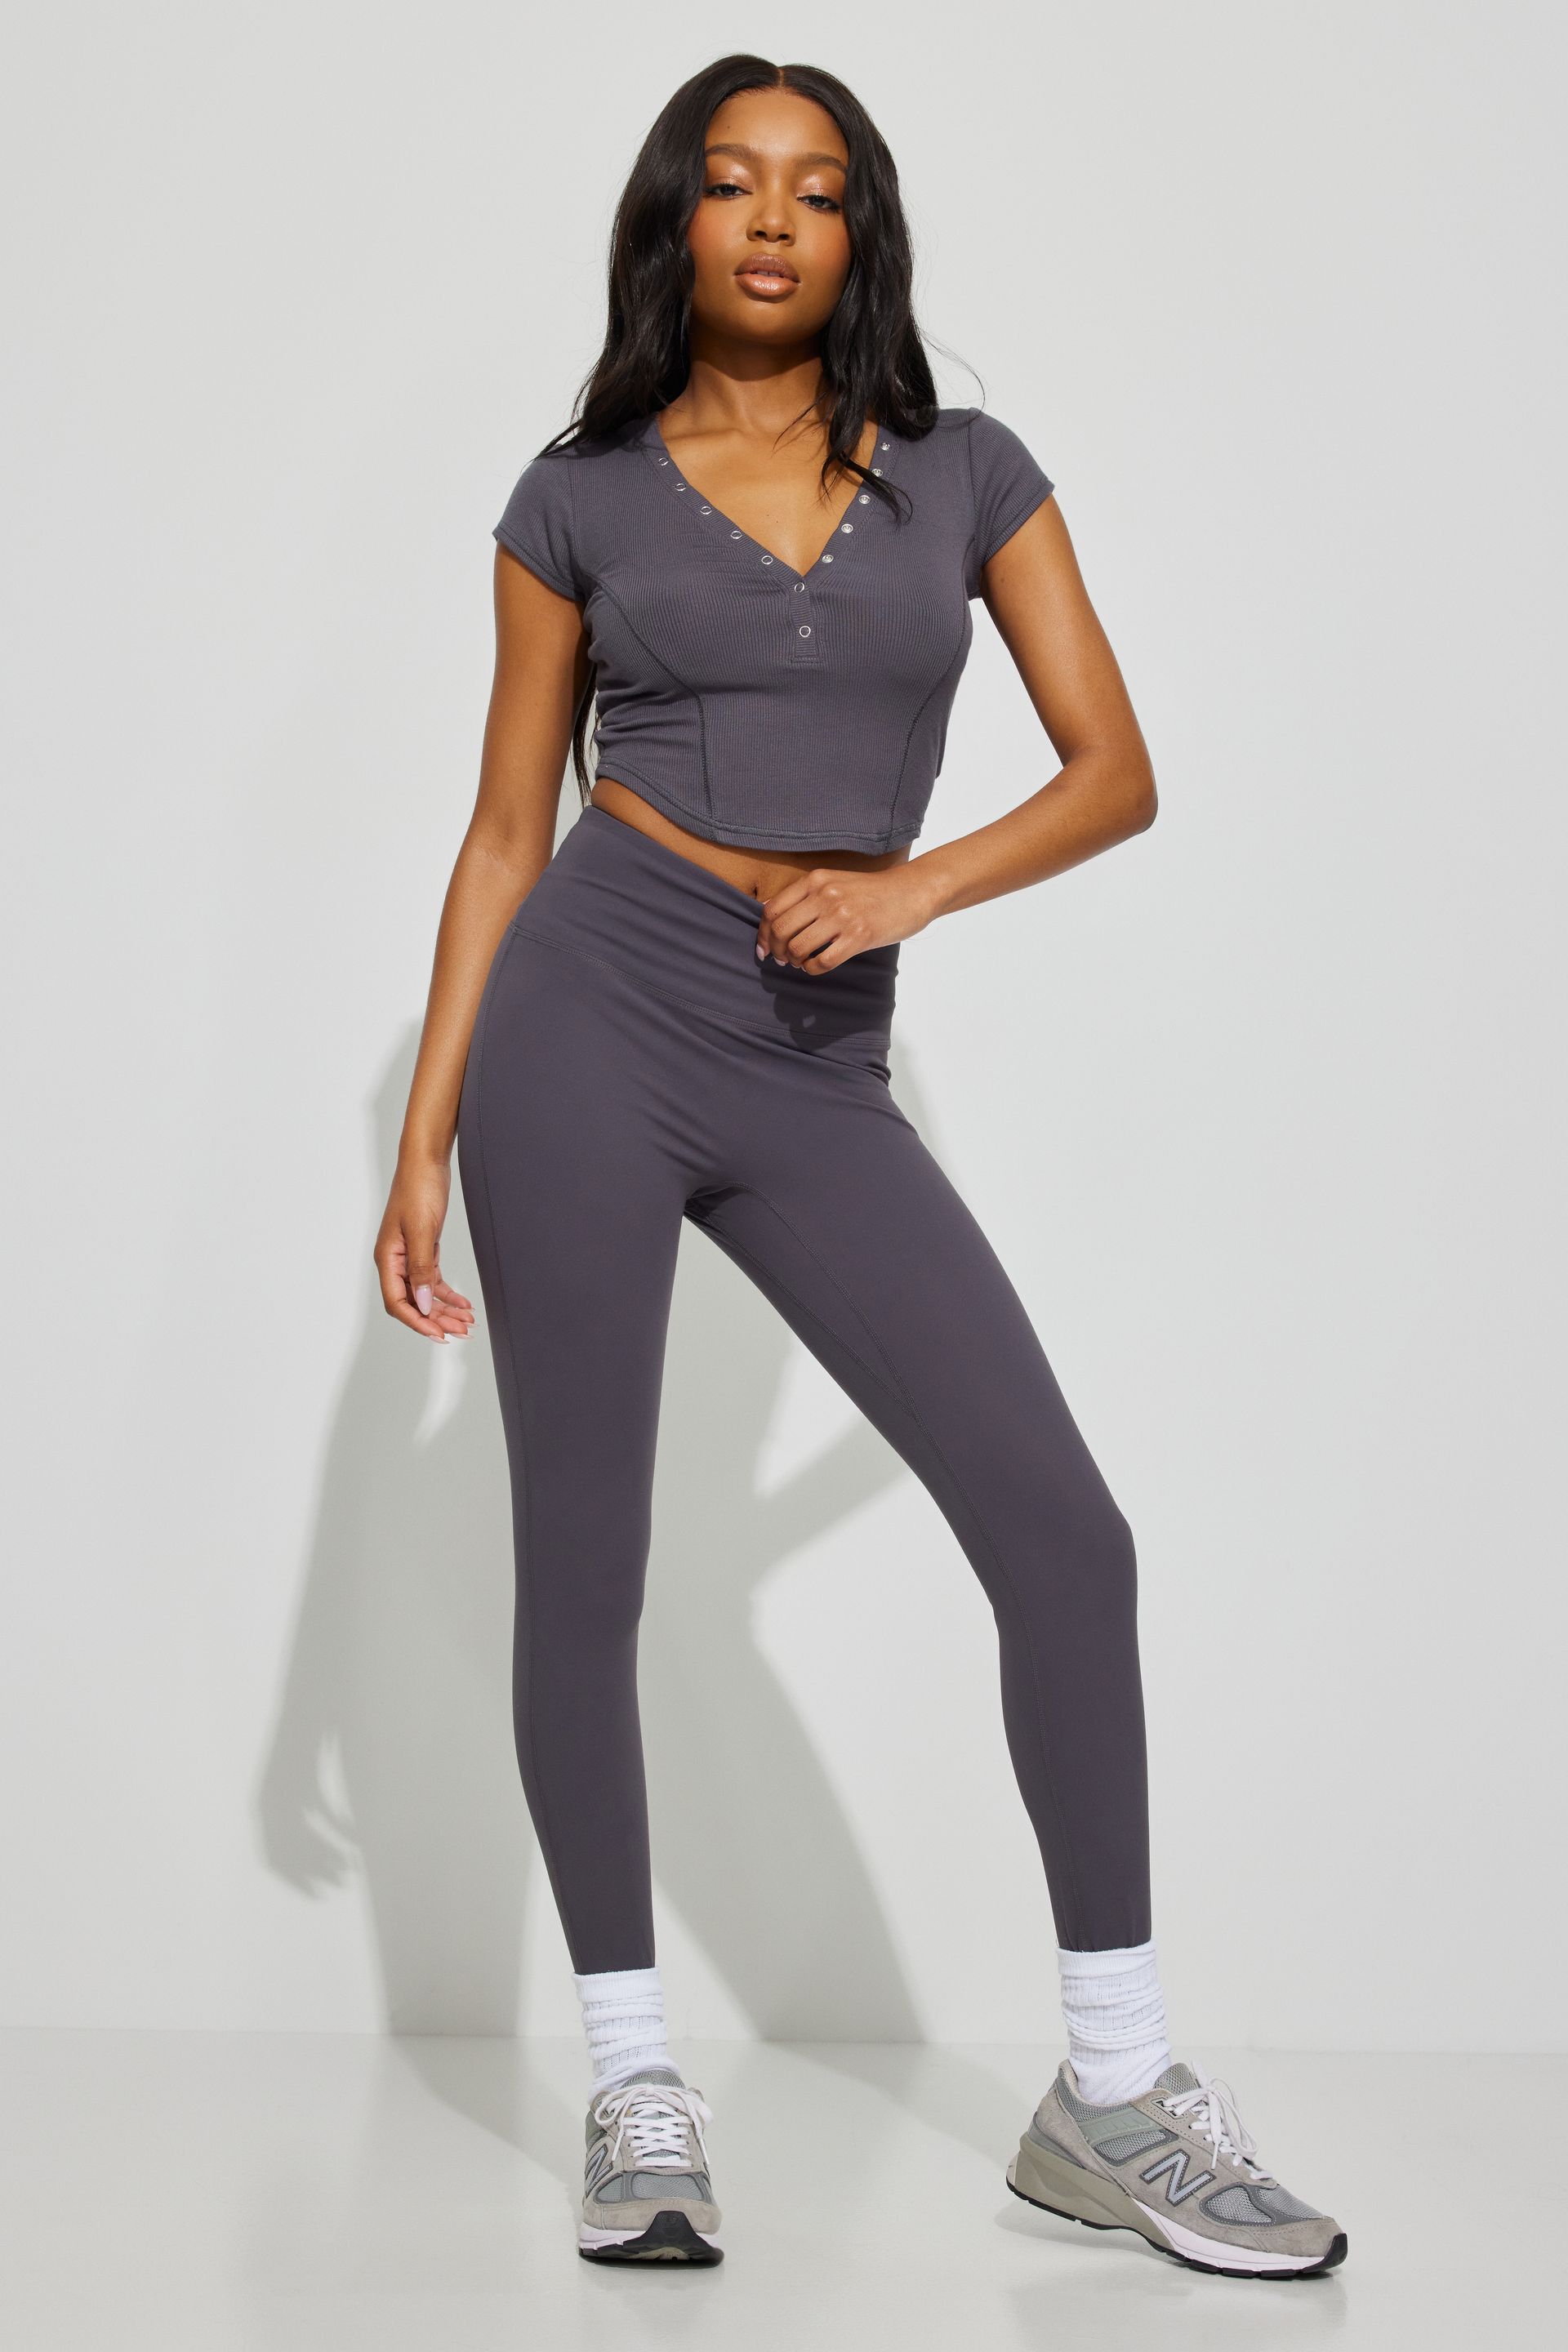 Buy Akaddy Push Up High Waist Yoga Pants Fitness Workout Slim Leggings for  Women(Grey M at Amazon.in